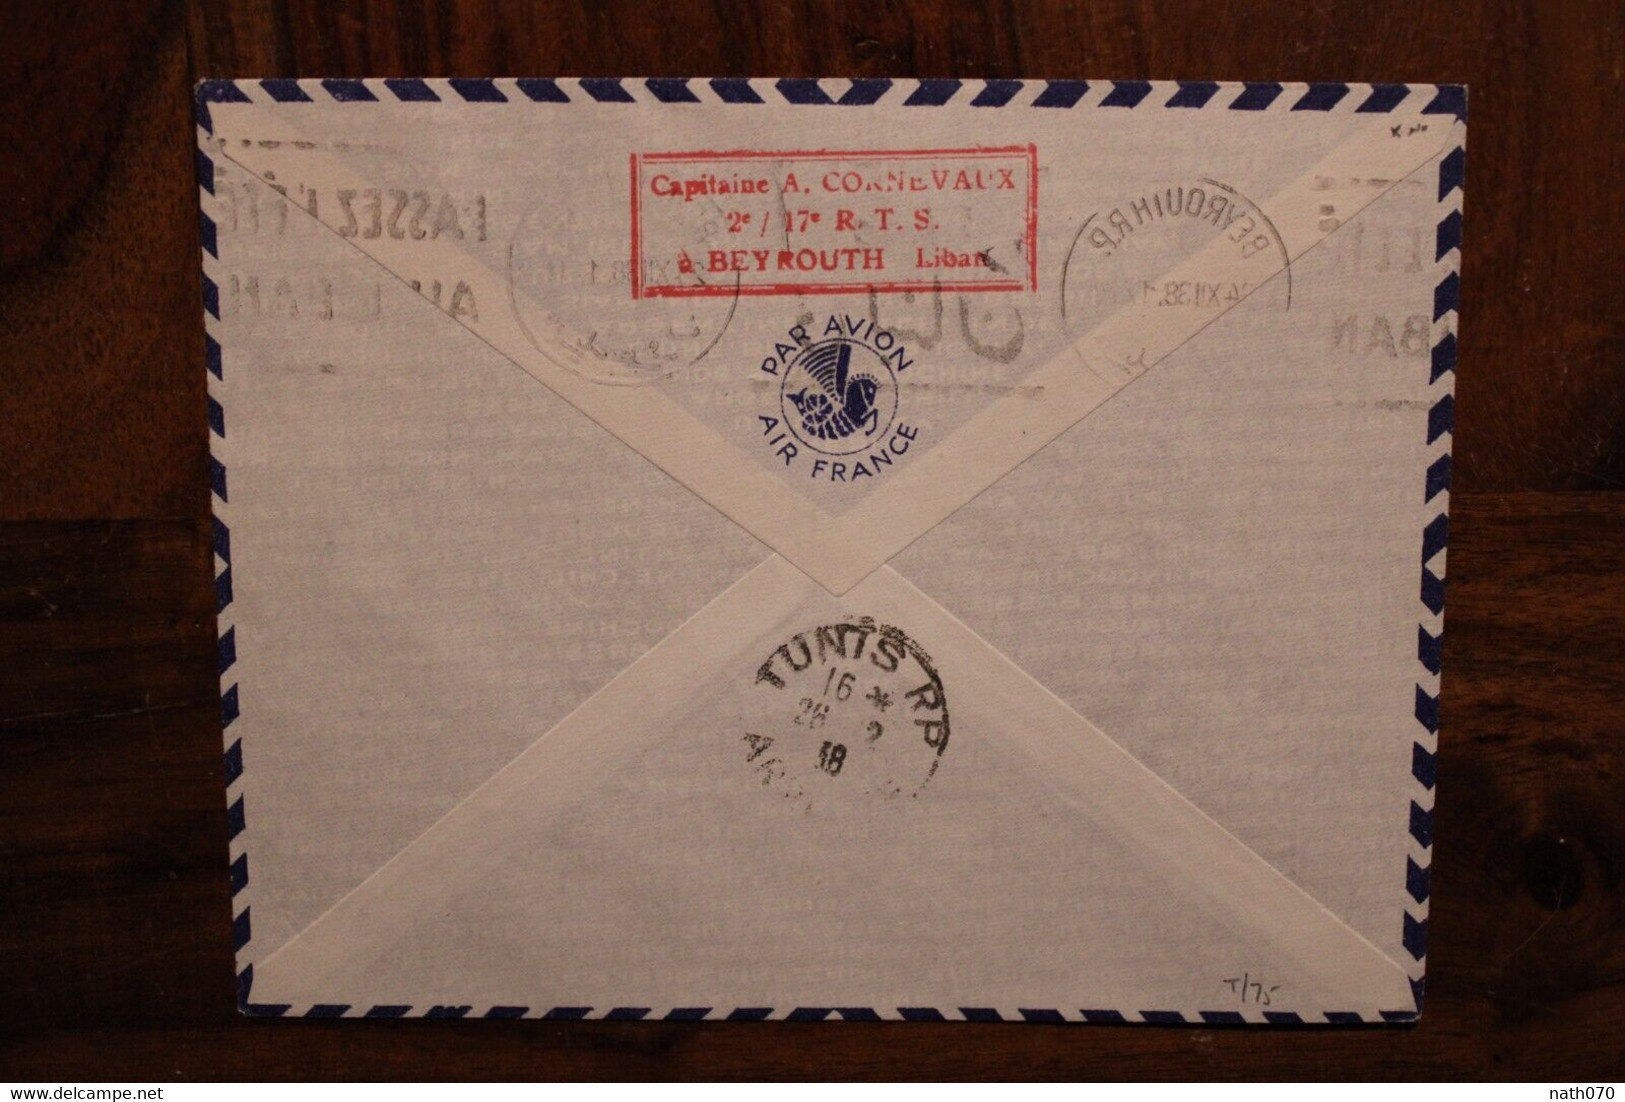 1938 Liban France Marseille Damas Syrie 1er Vol France Air Mail Cover Lebanon 1st Flight Via Tunisie - Briefe U. Dokumente